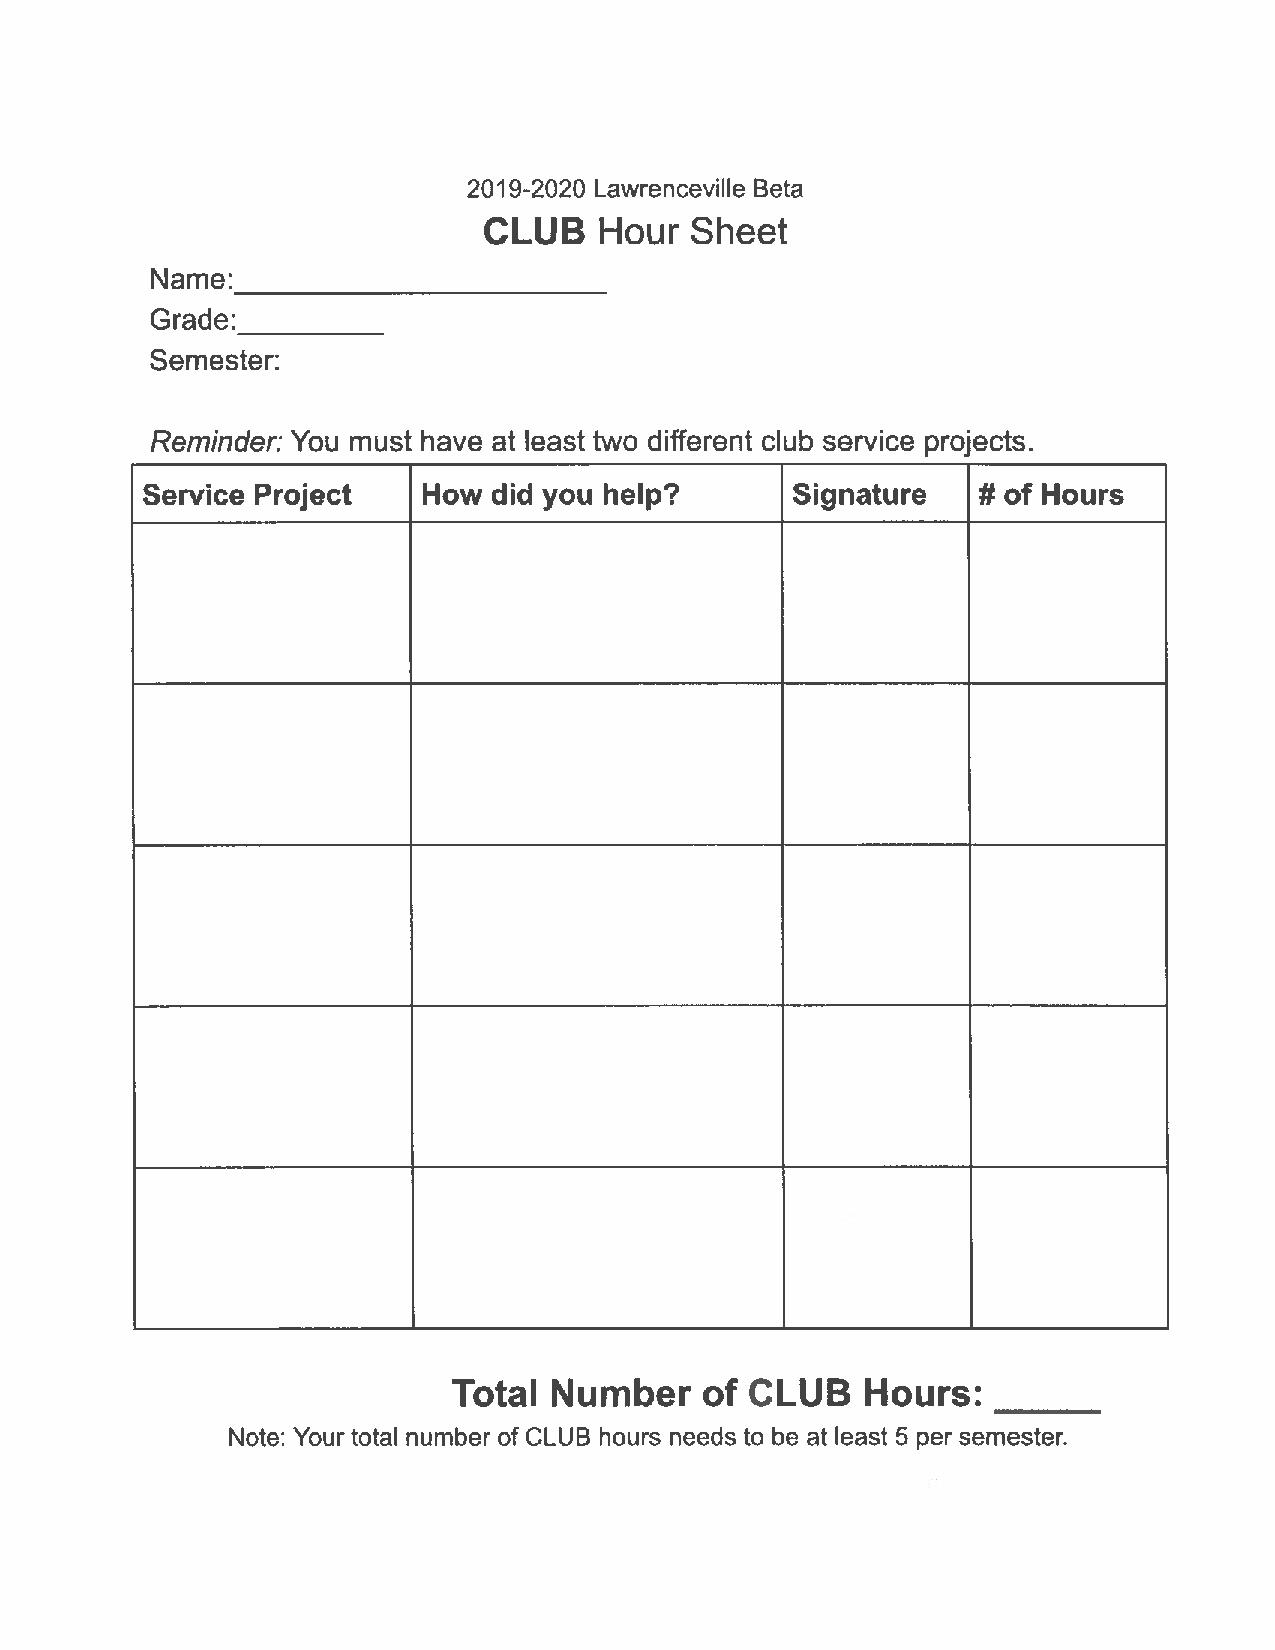 Club Hour Sheet